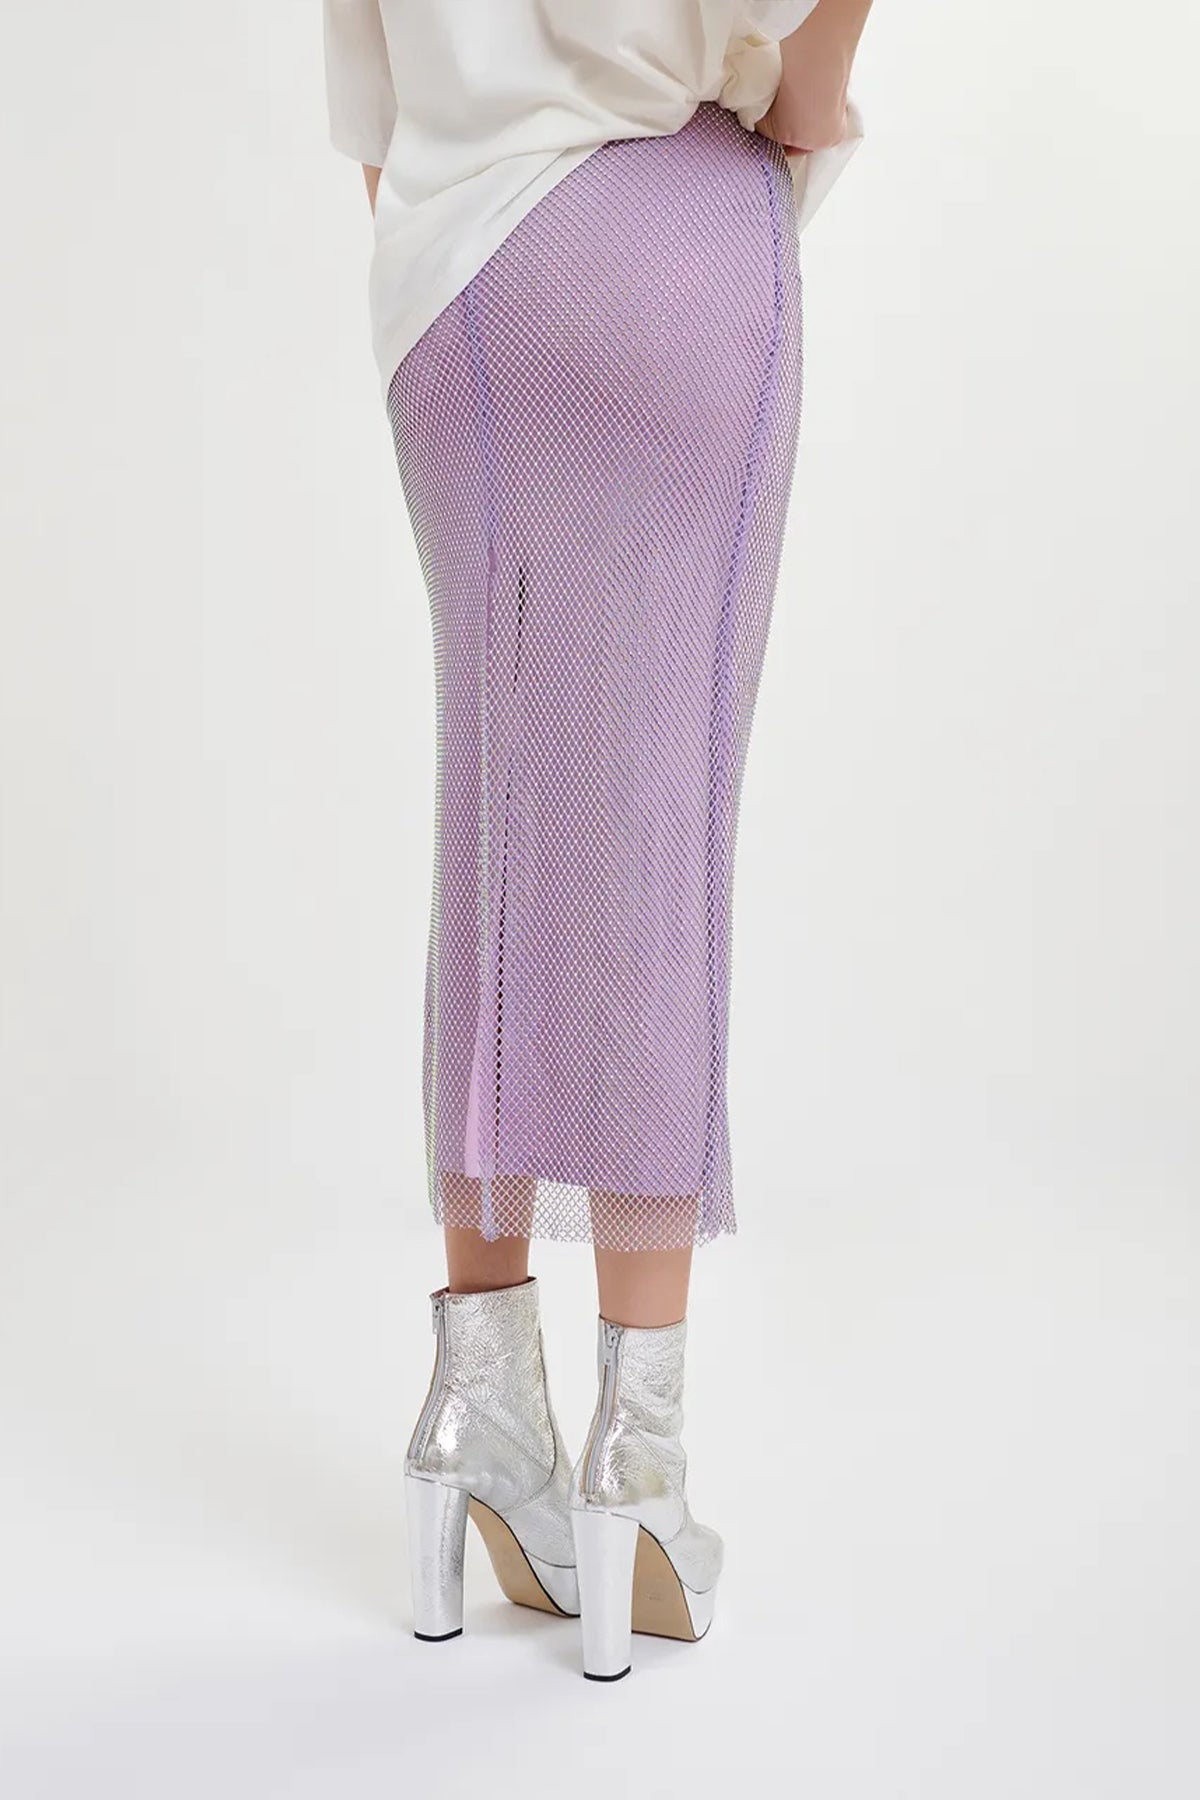 Flaminglips Rhinestone - Embellished Midi Skirt in Lilac - shop - olivia.com